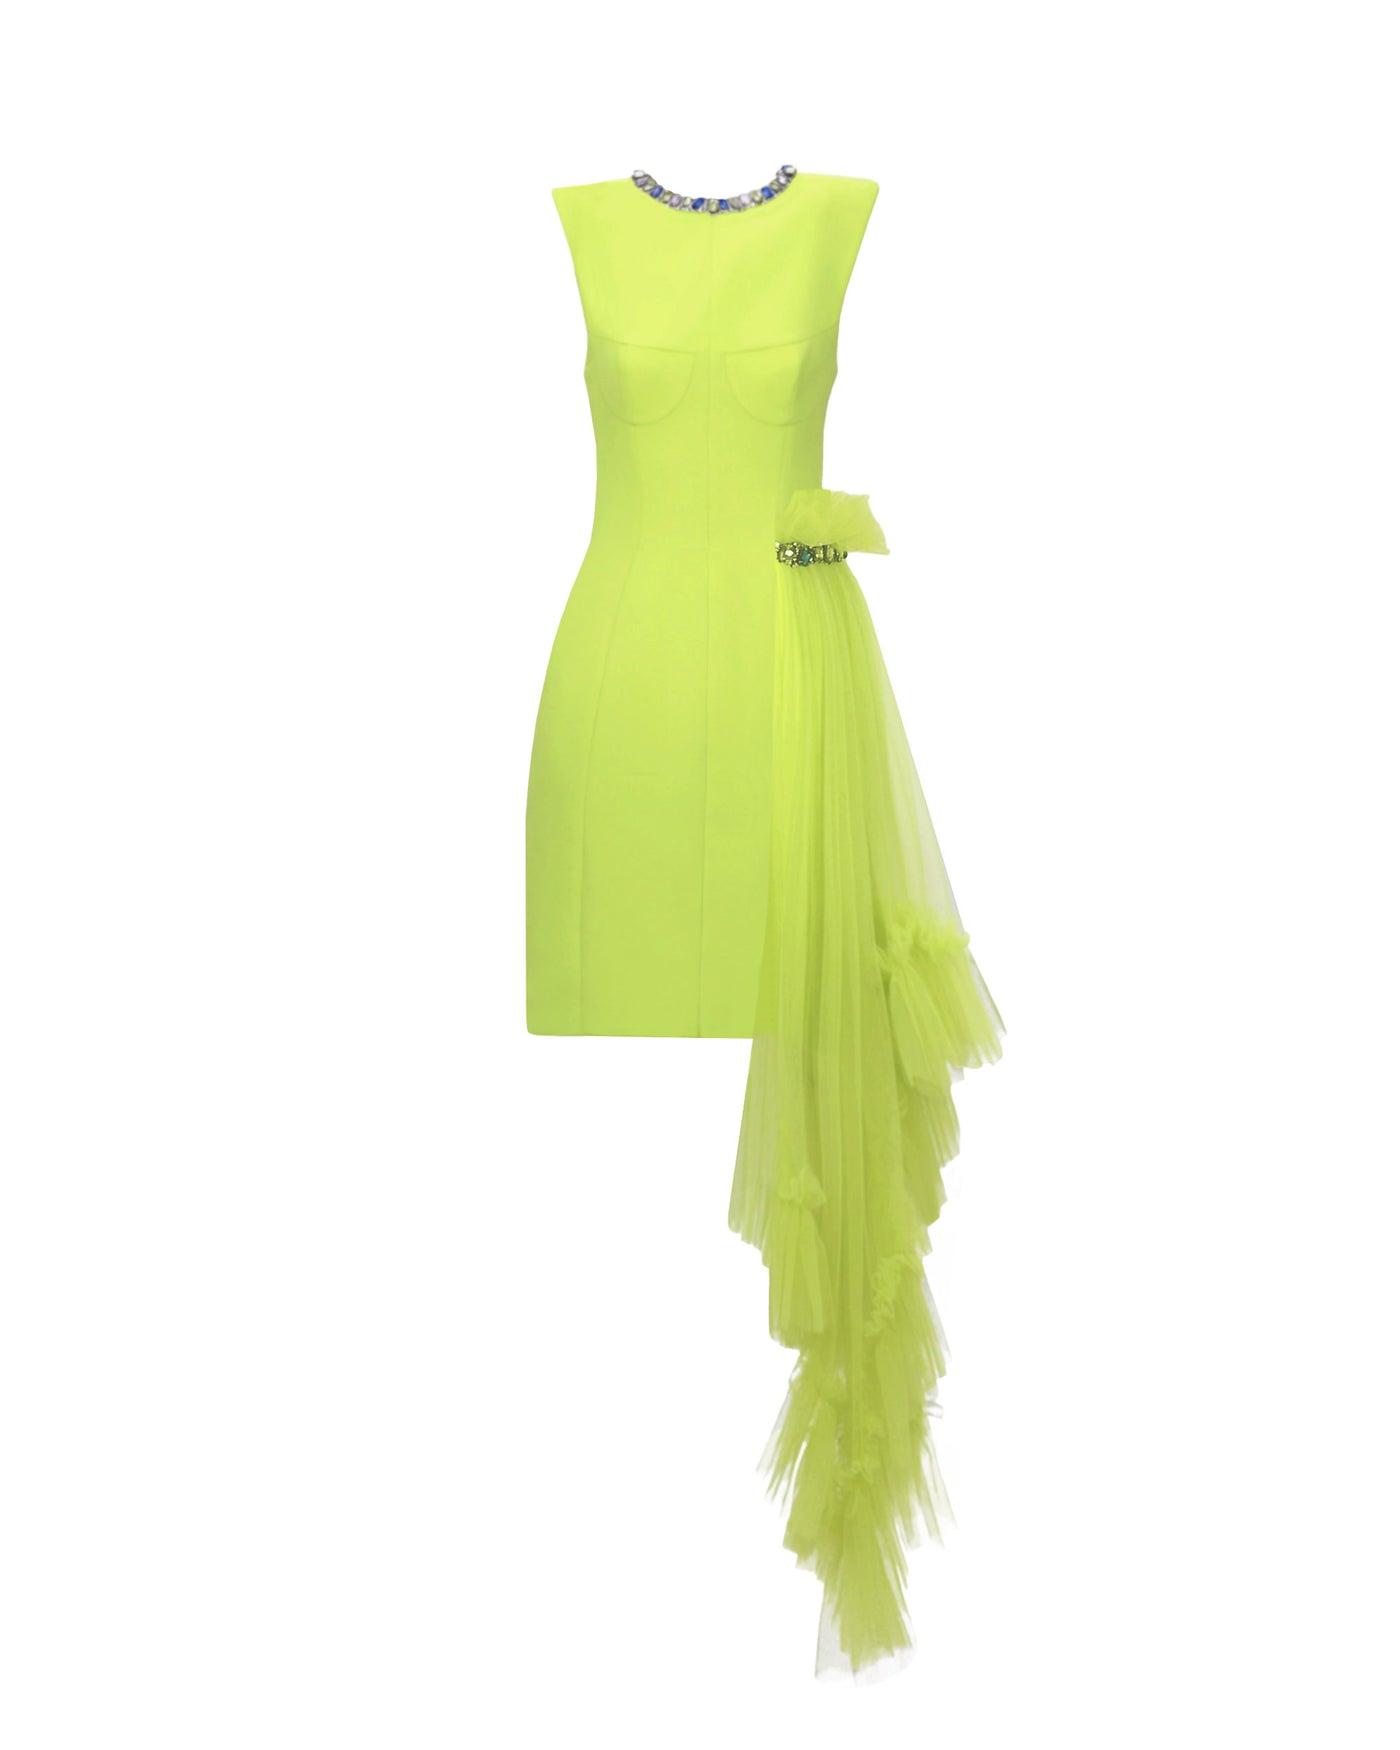 Short Structured Lime Dress